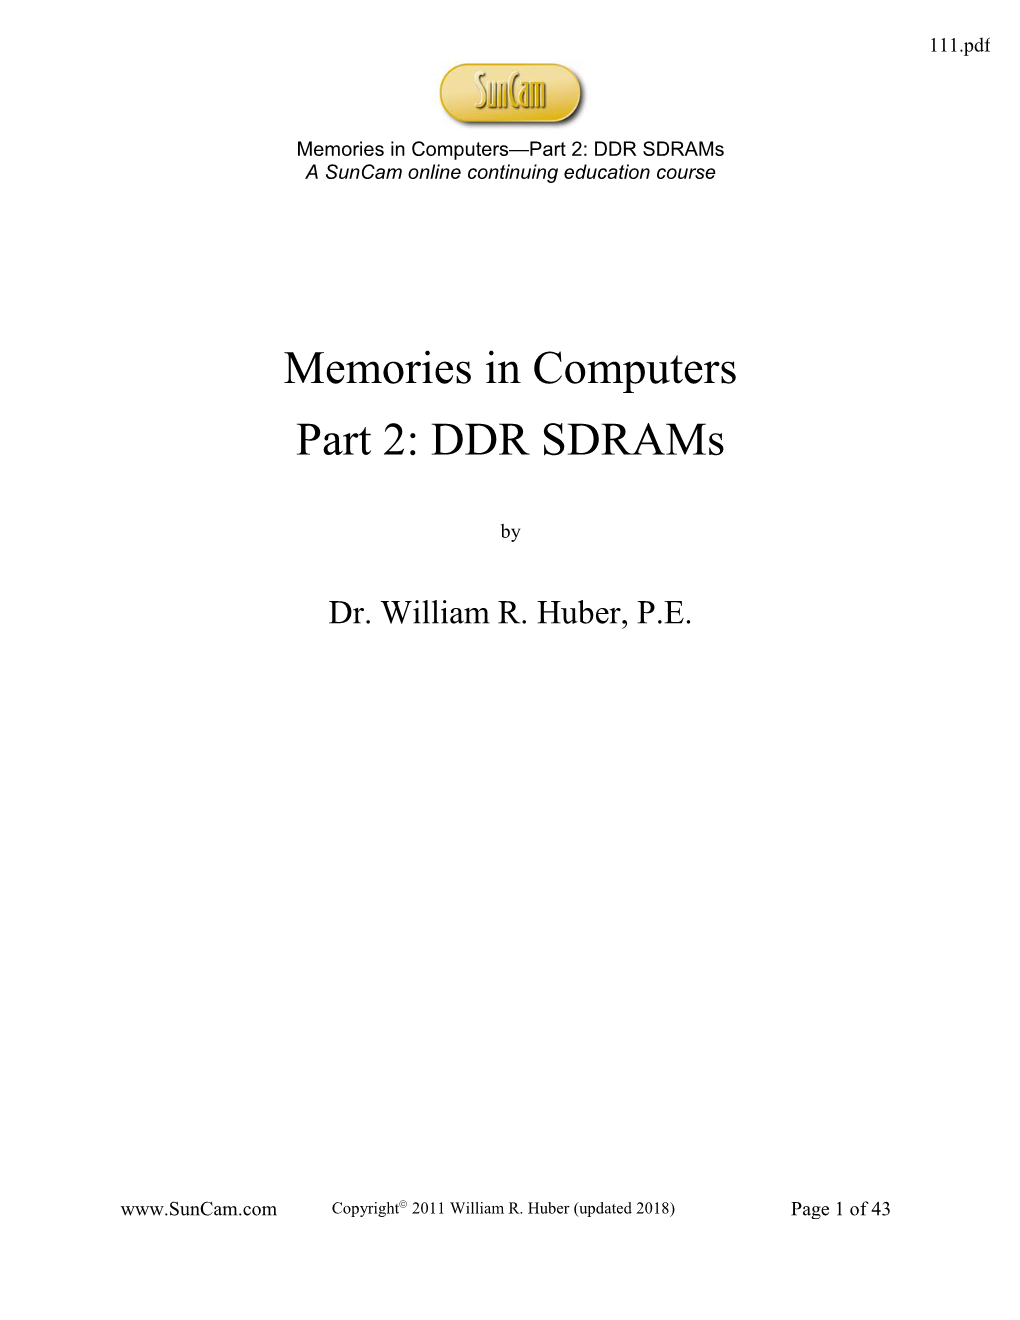 Memories in Computers Part 2: DDR Sdrams